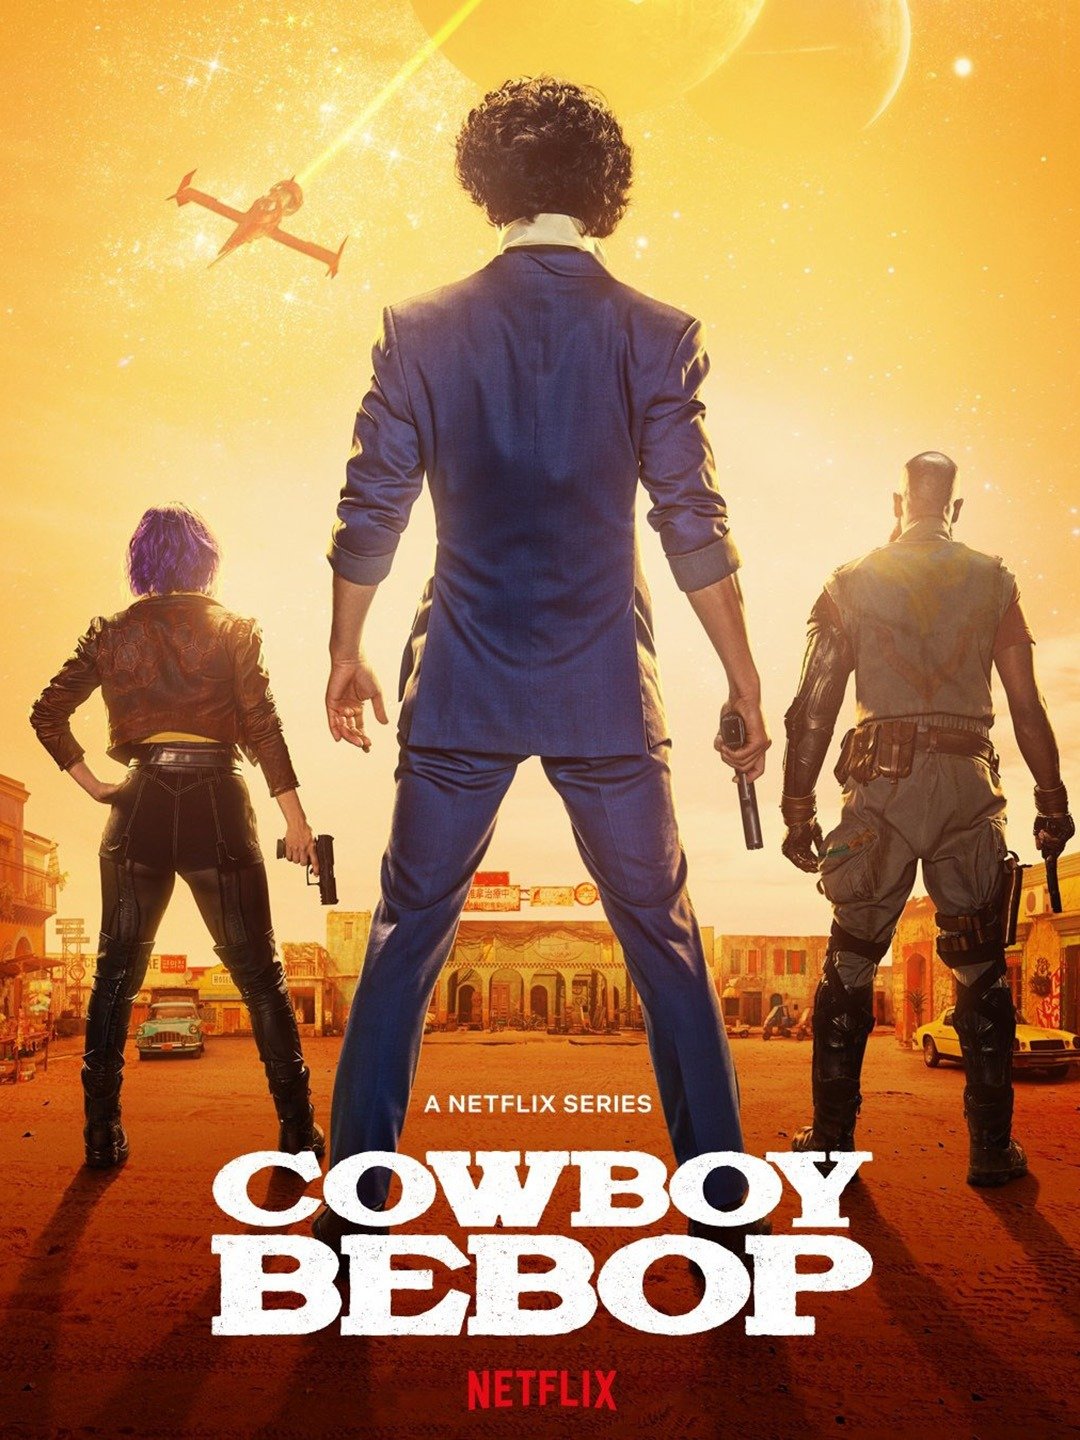 Is Cowboy Bebop: The Movie on Netflix?